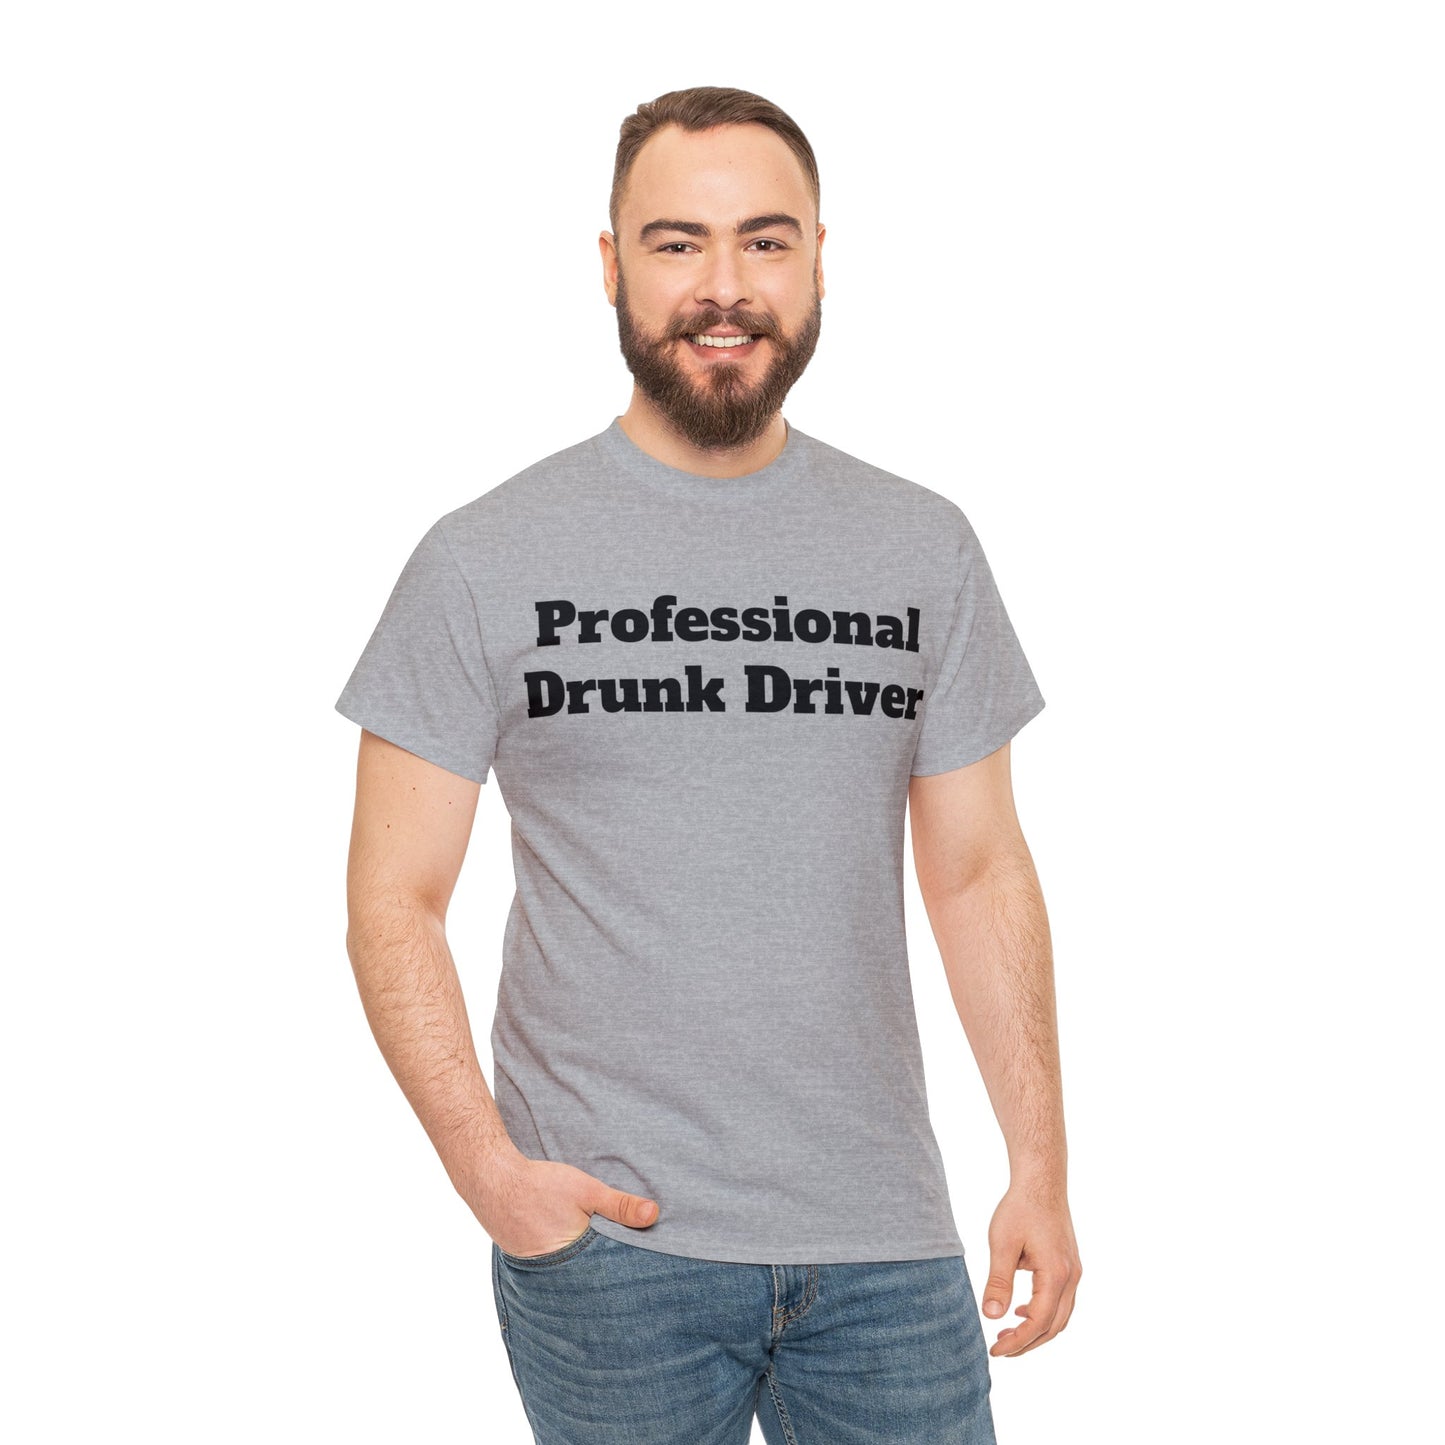 Professional Drunk Driver